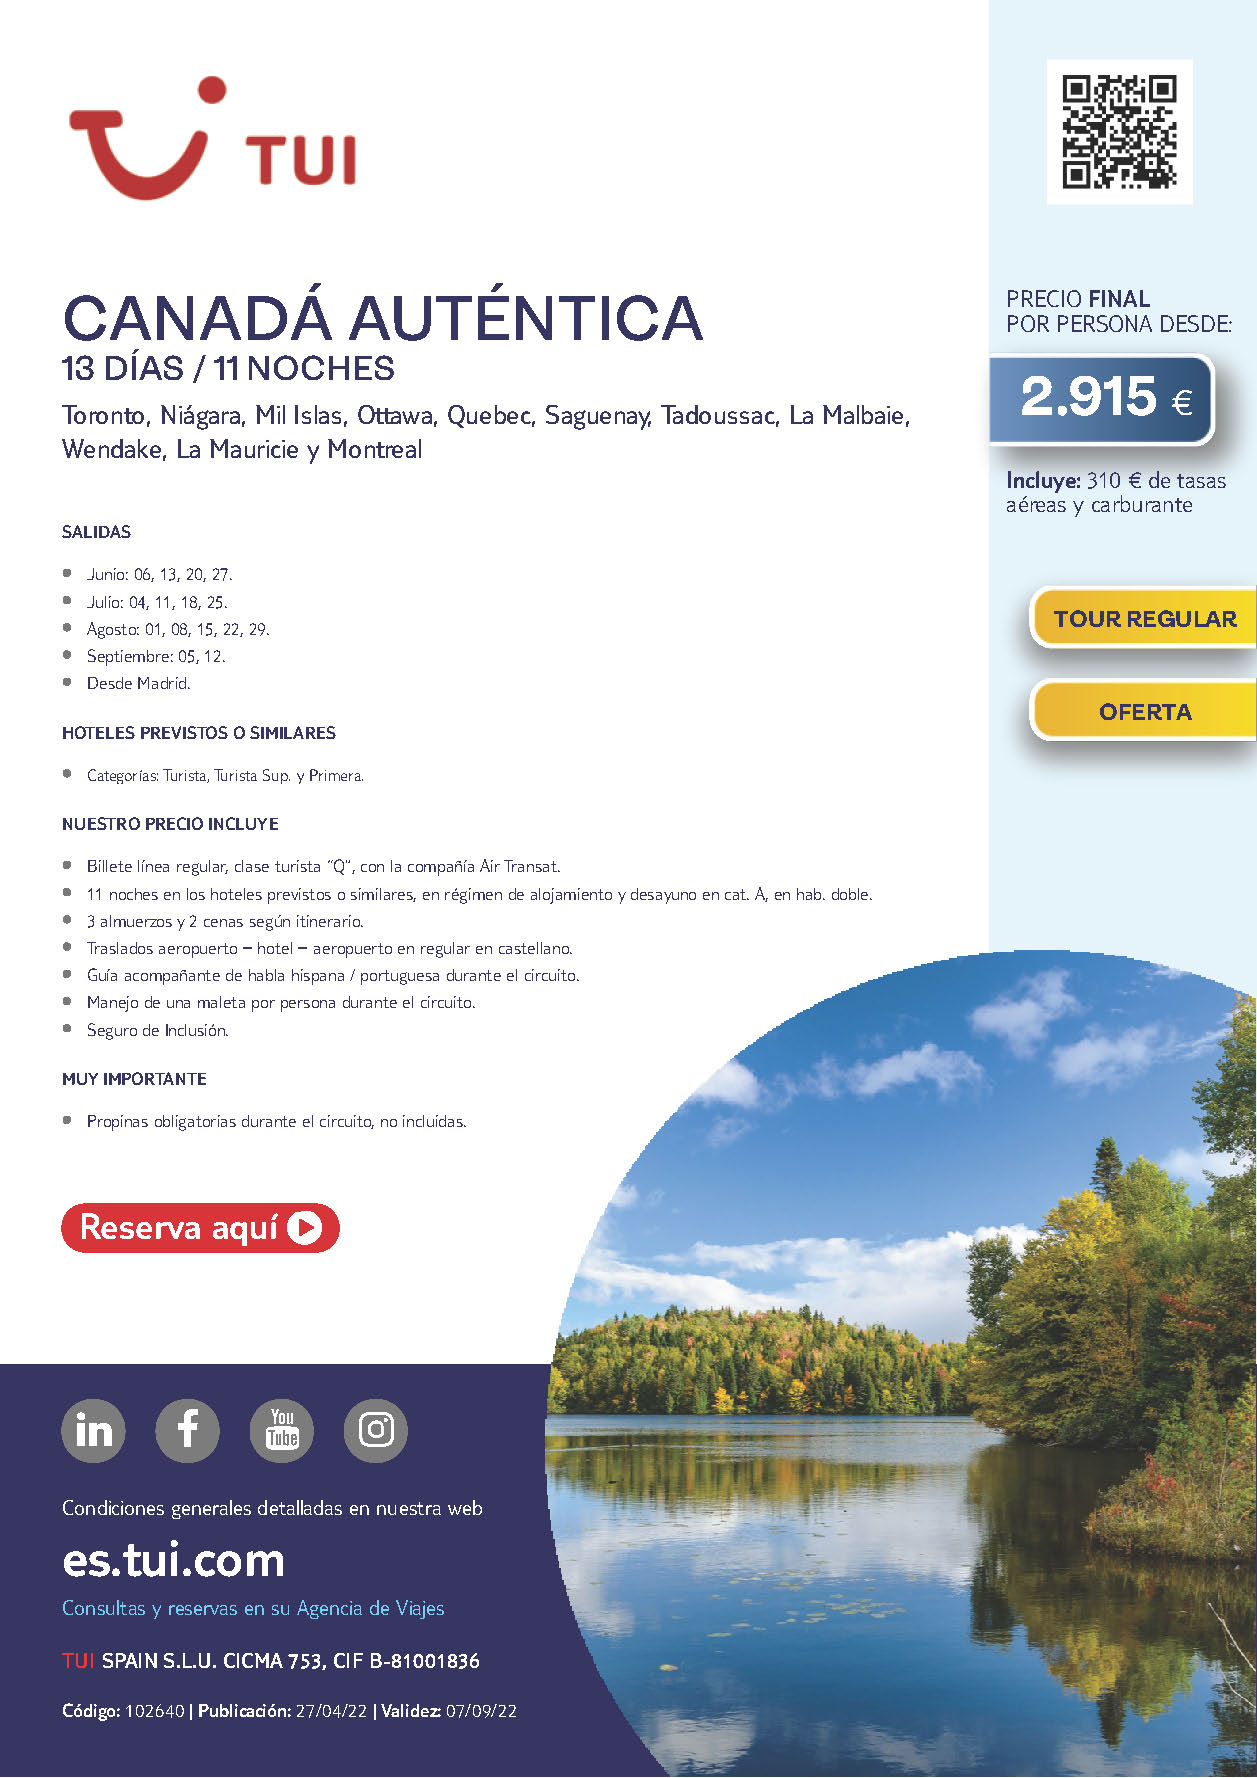 Oferta TUI Canada Autentica 13 dias Junio a Septiembre 2022 salidas desde Madrid vuelos Air Transat